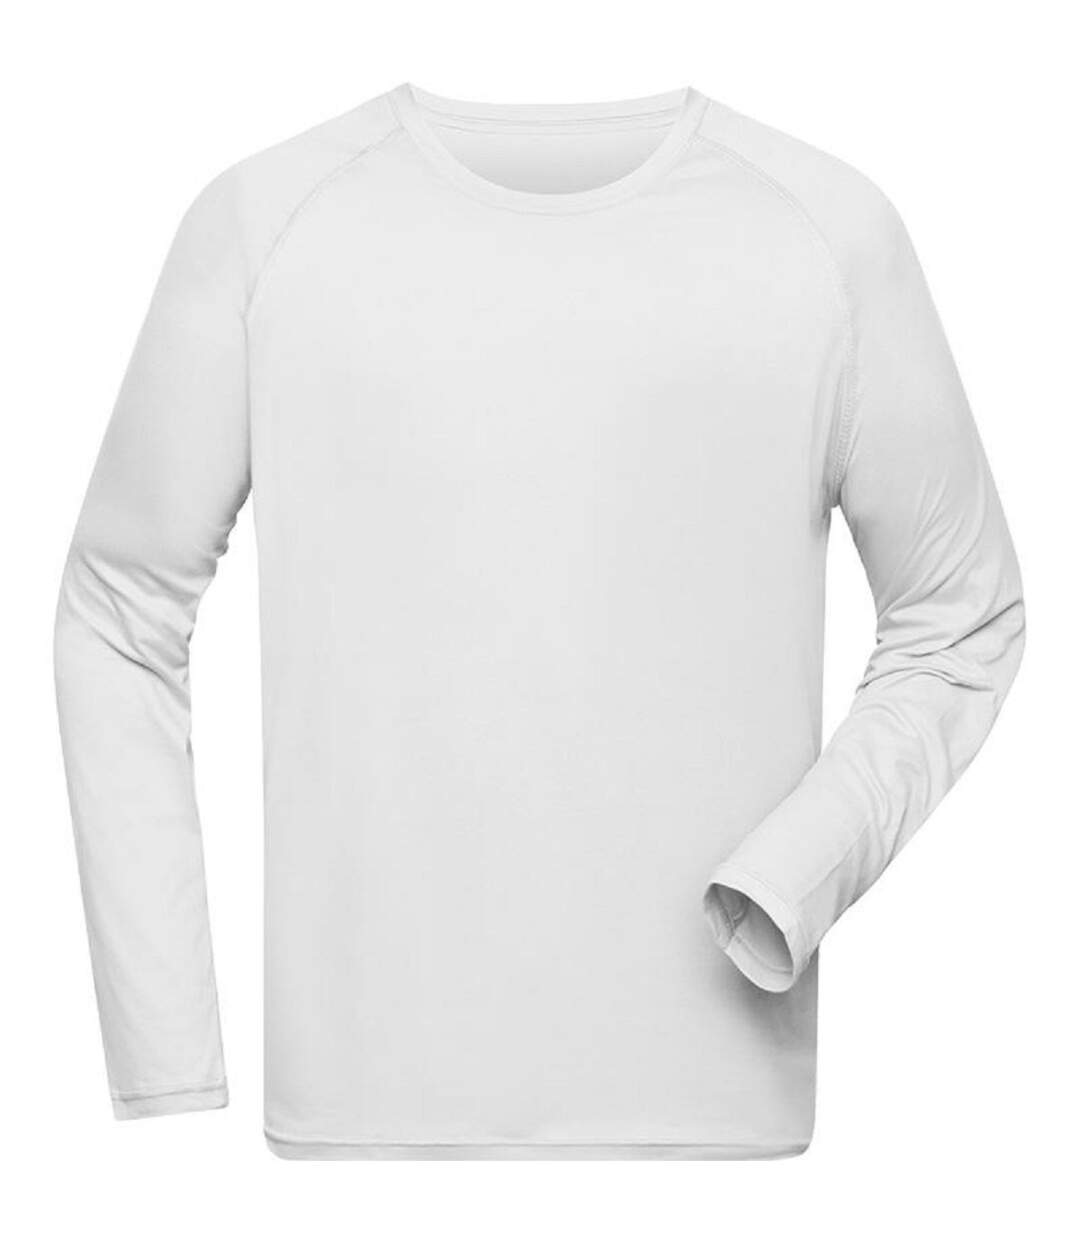 Maillot running en polyester recyclé - Homme - JN522 - blanc